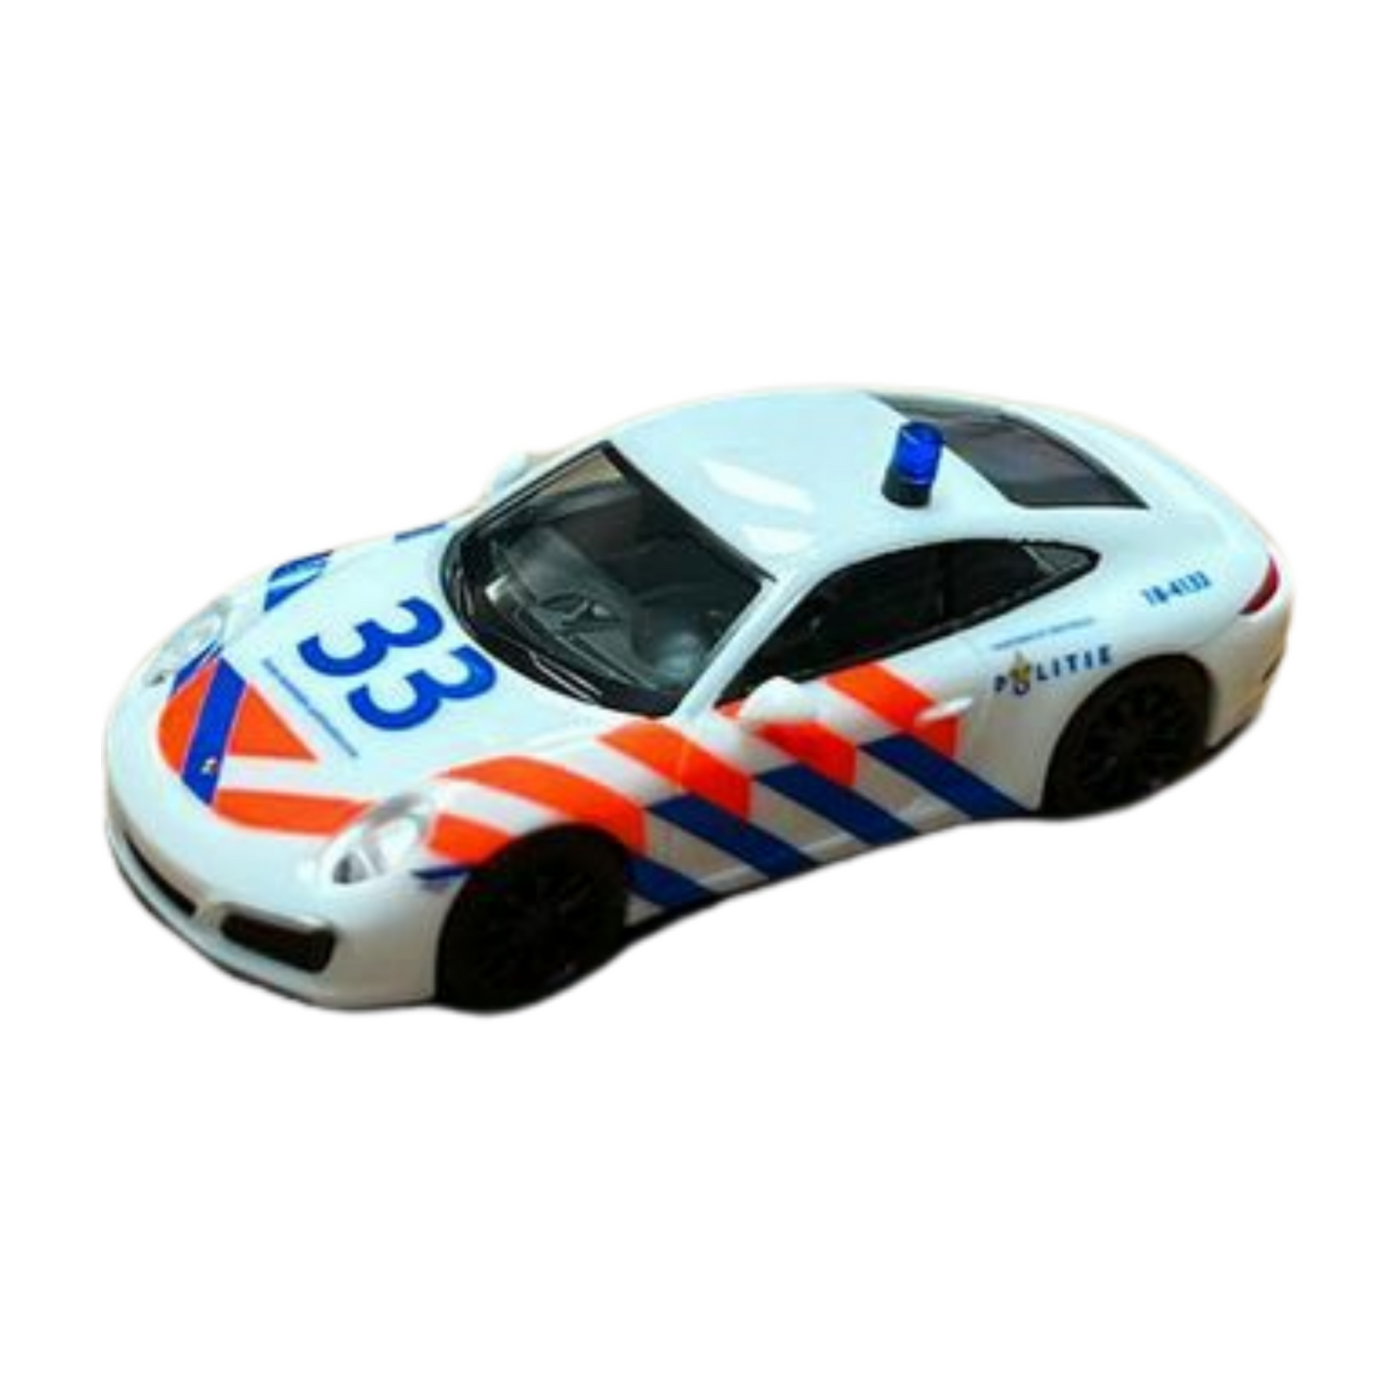 Herpa Politie Auto's: Dienstverlening op Nederlandse Wielen!